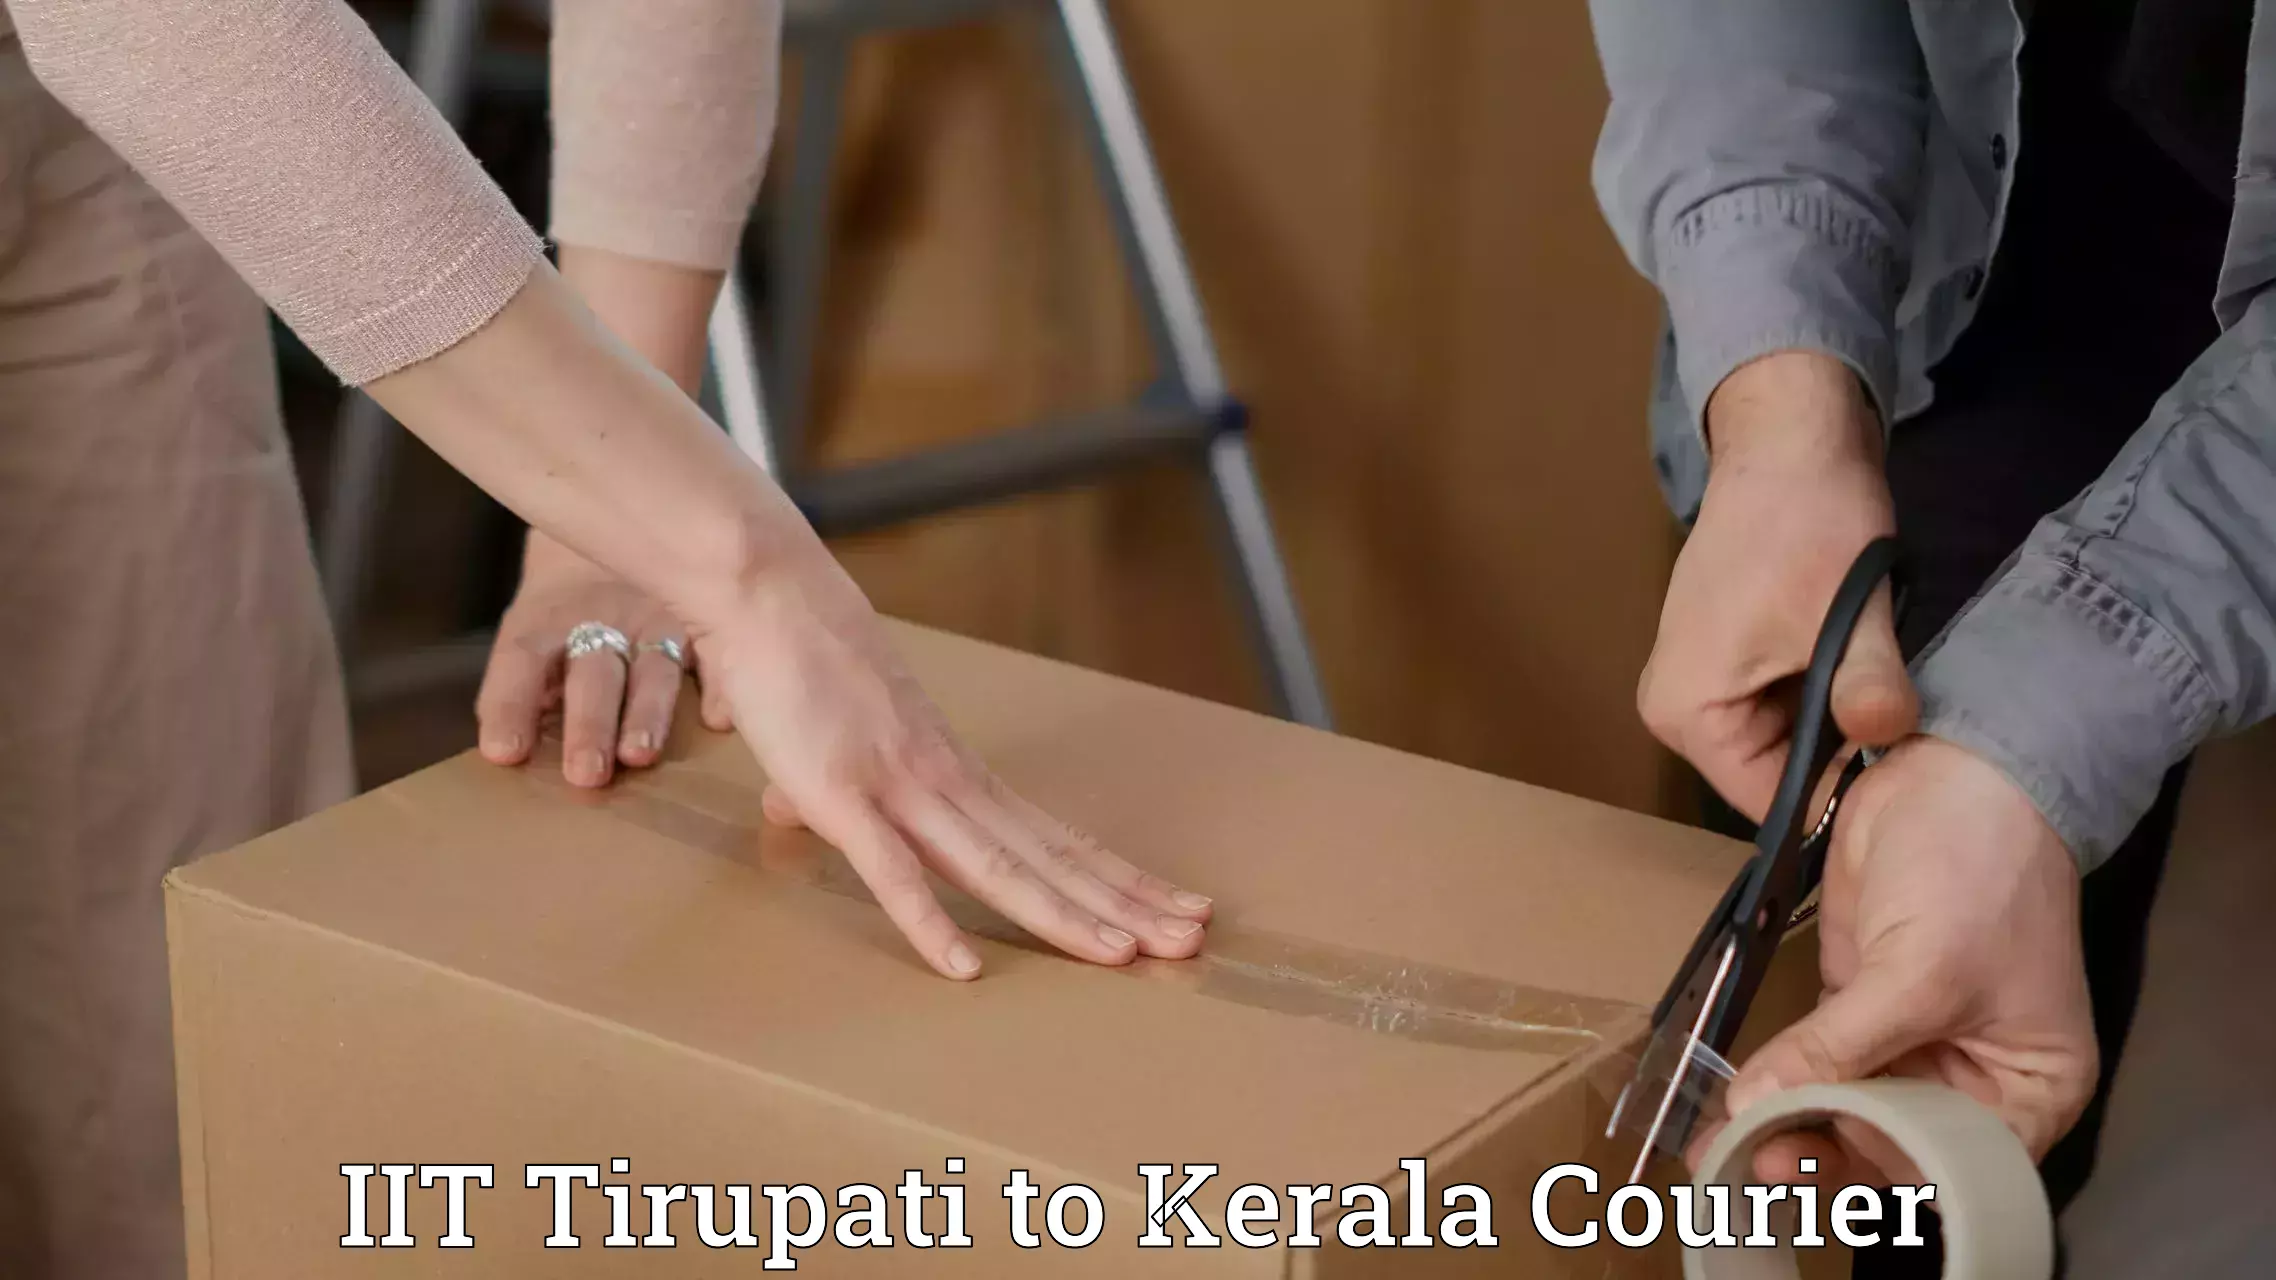 Easy return solutions in IIT Tirupati to Kalanjoor